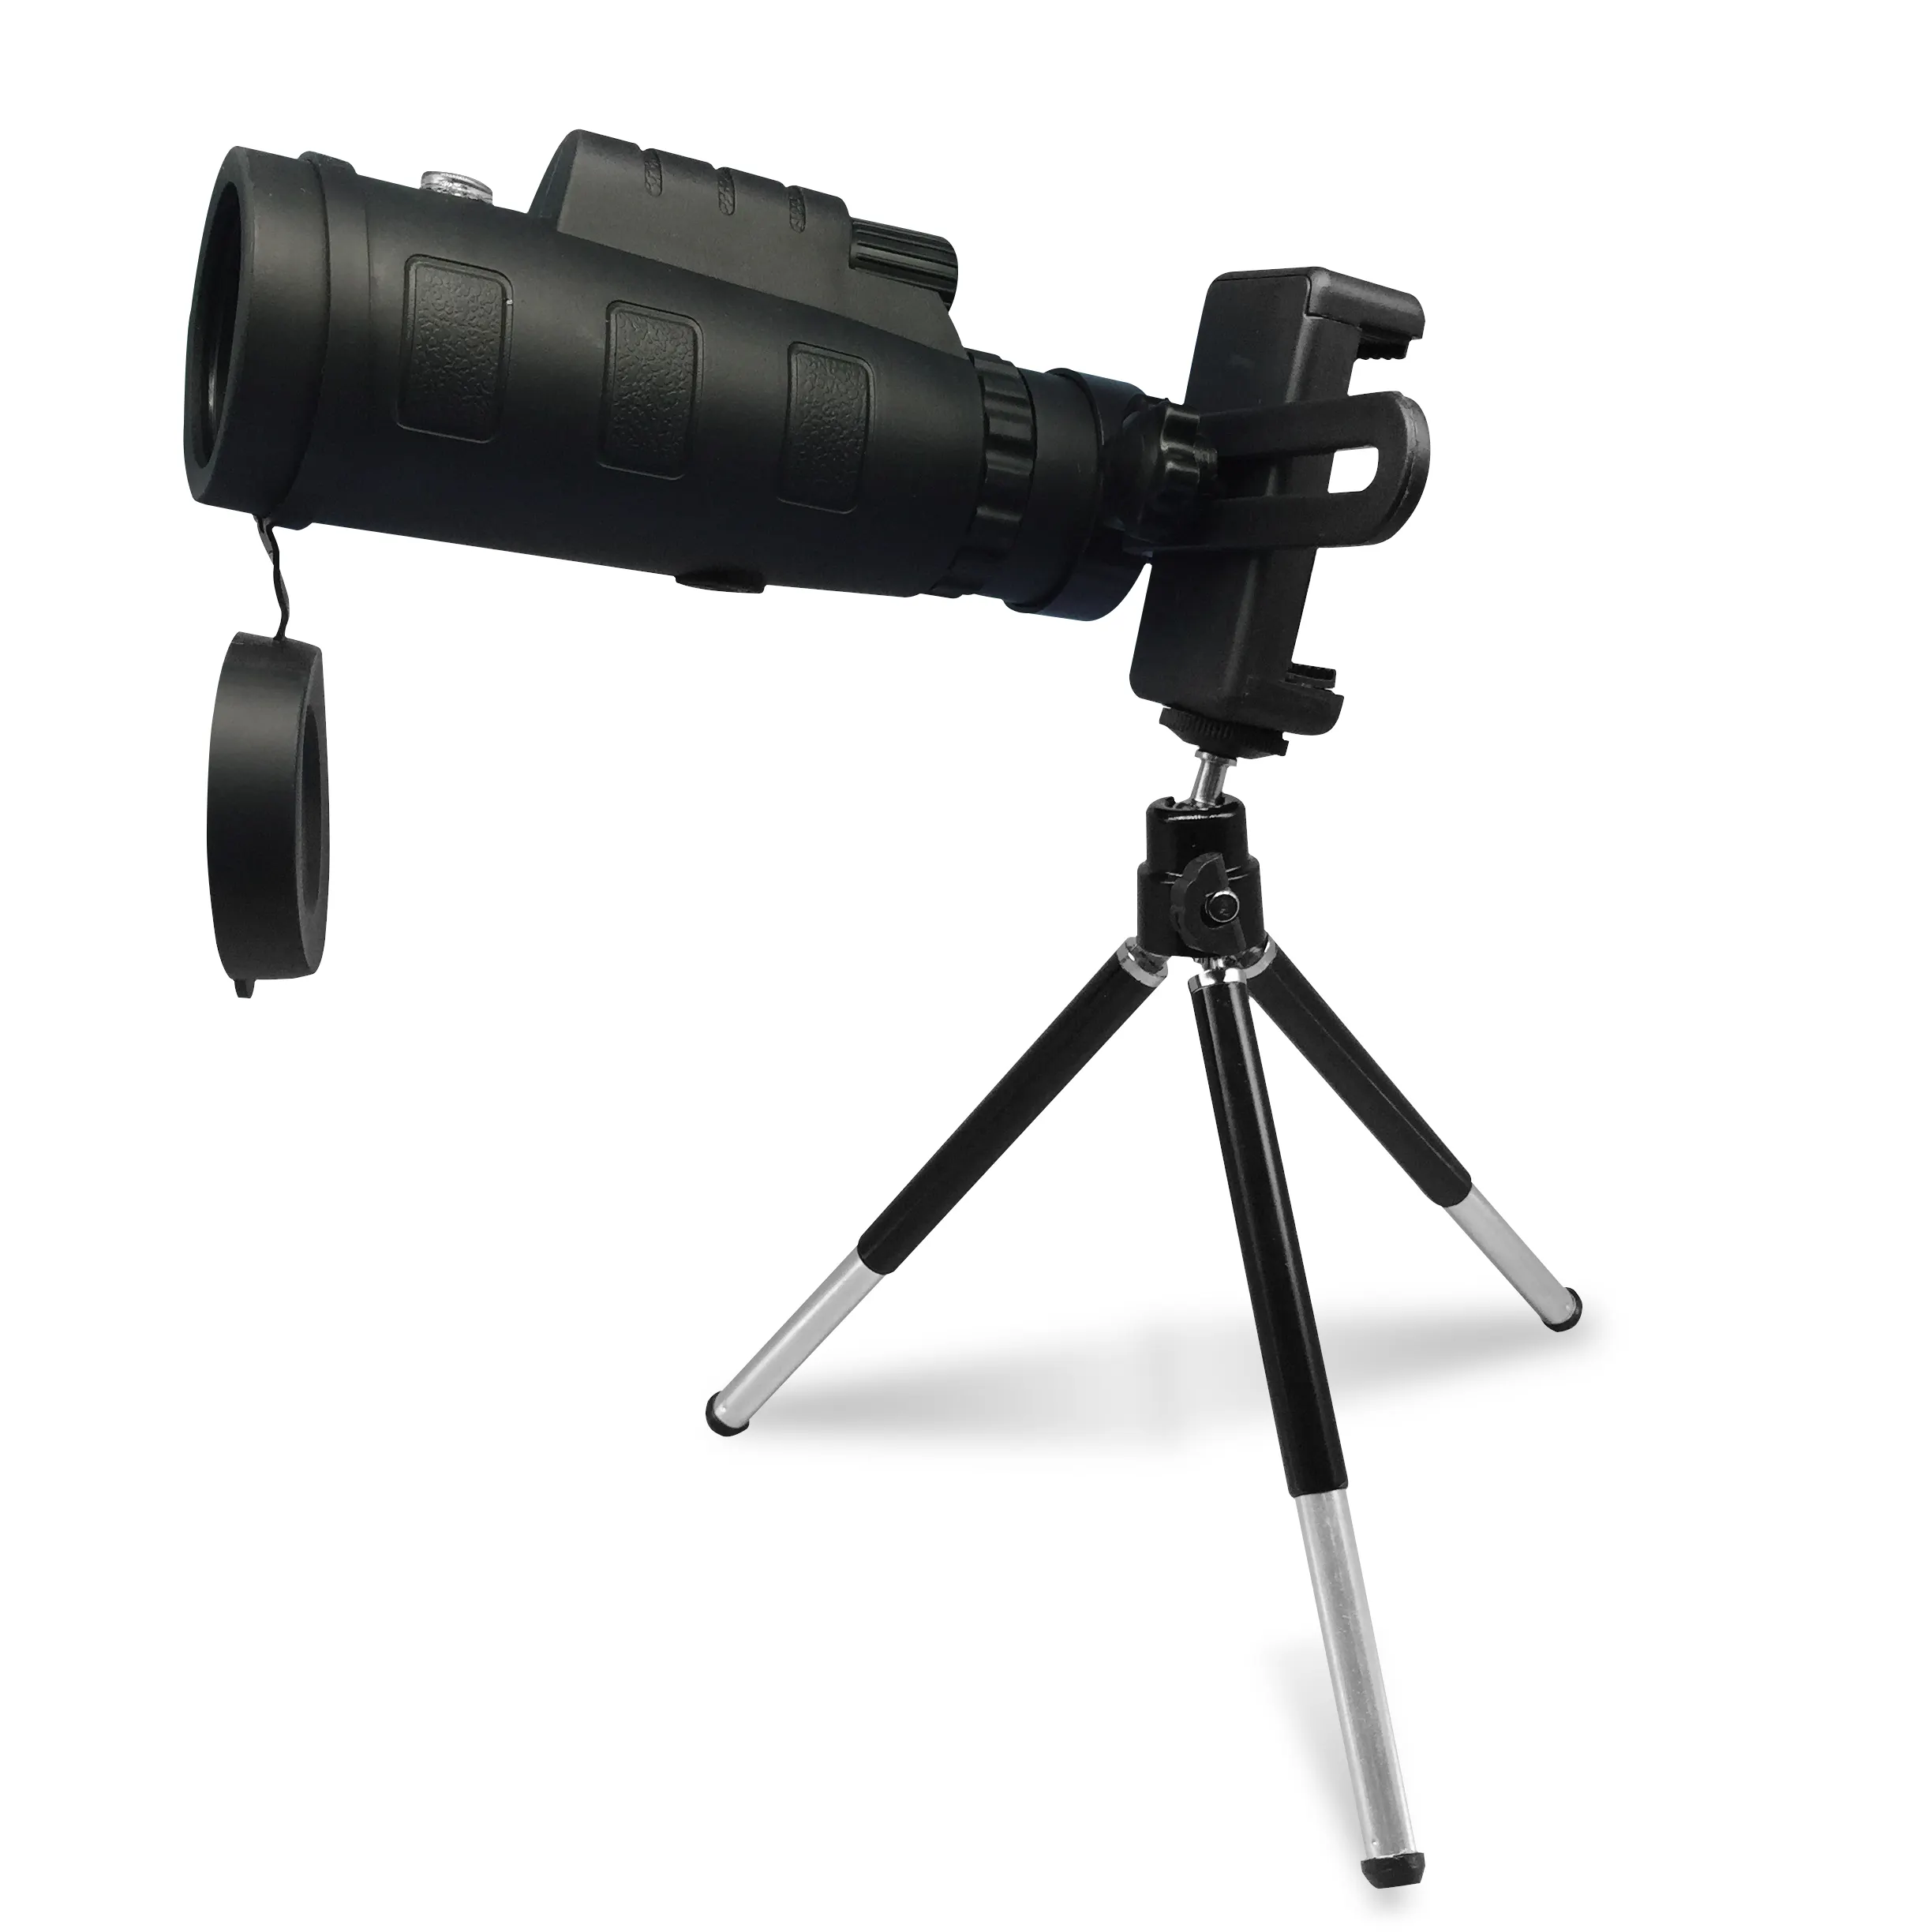 40x60 Monocular Telescope, High-Powered BAK4 Prism FMC Lens Waterproof Scope with Smartphone Adapter Tripod Holder